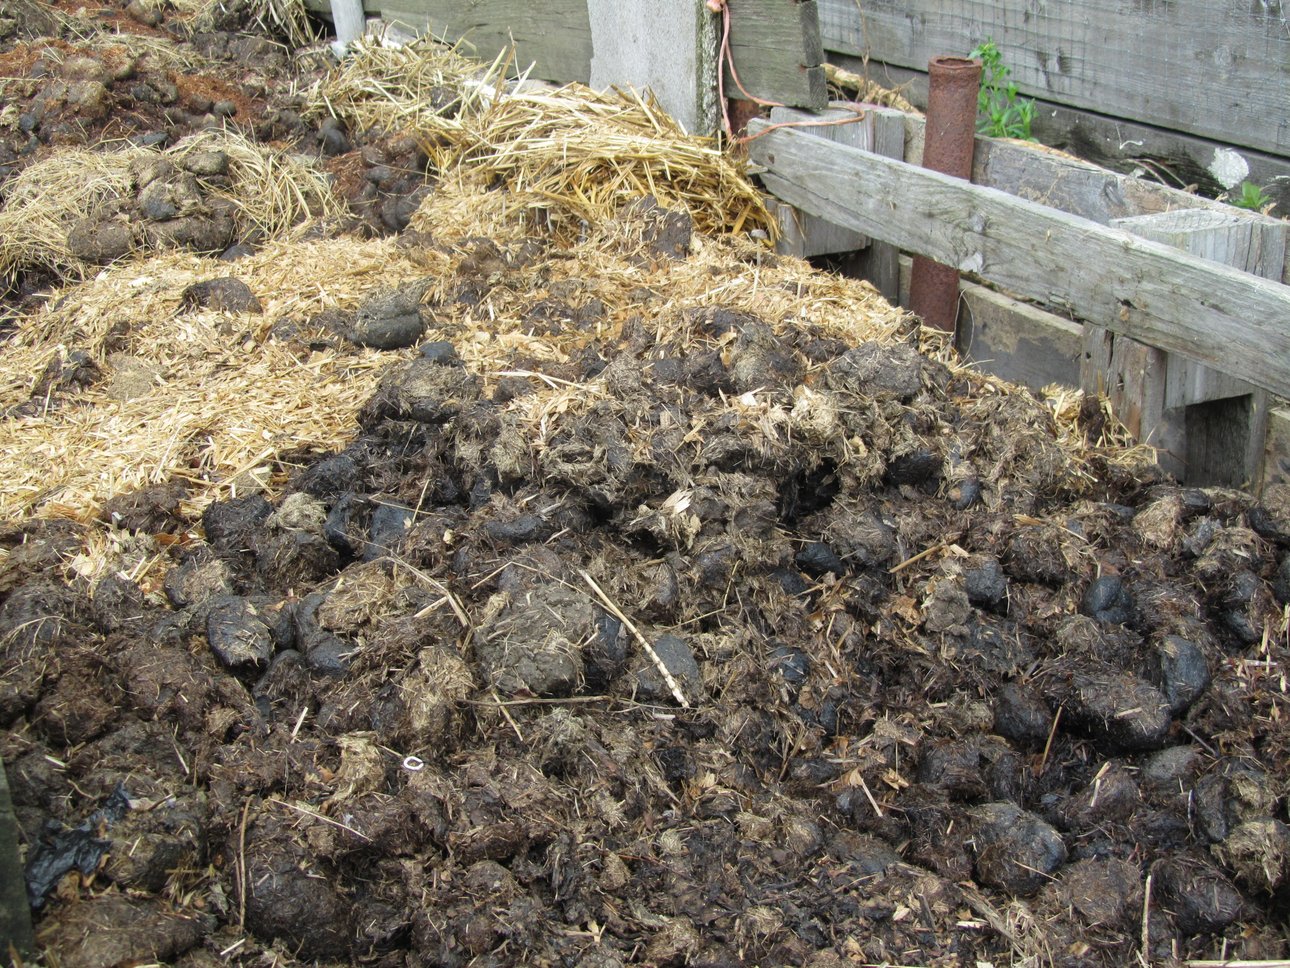 Horse manure composting